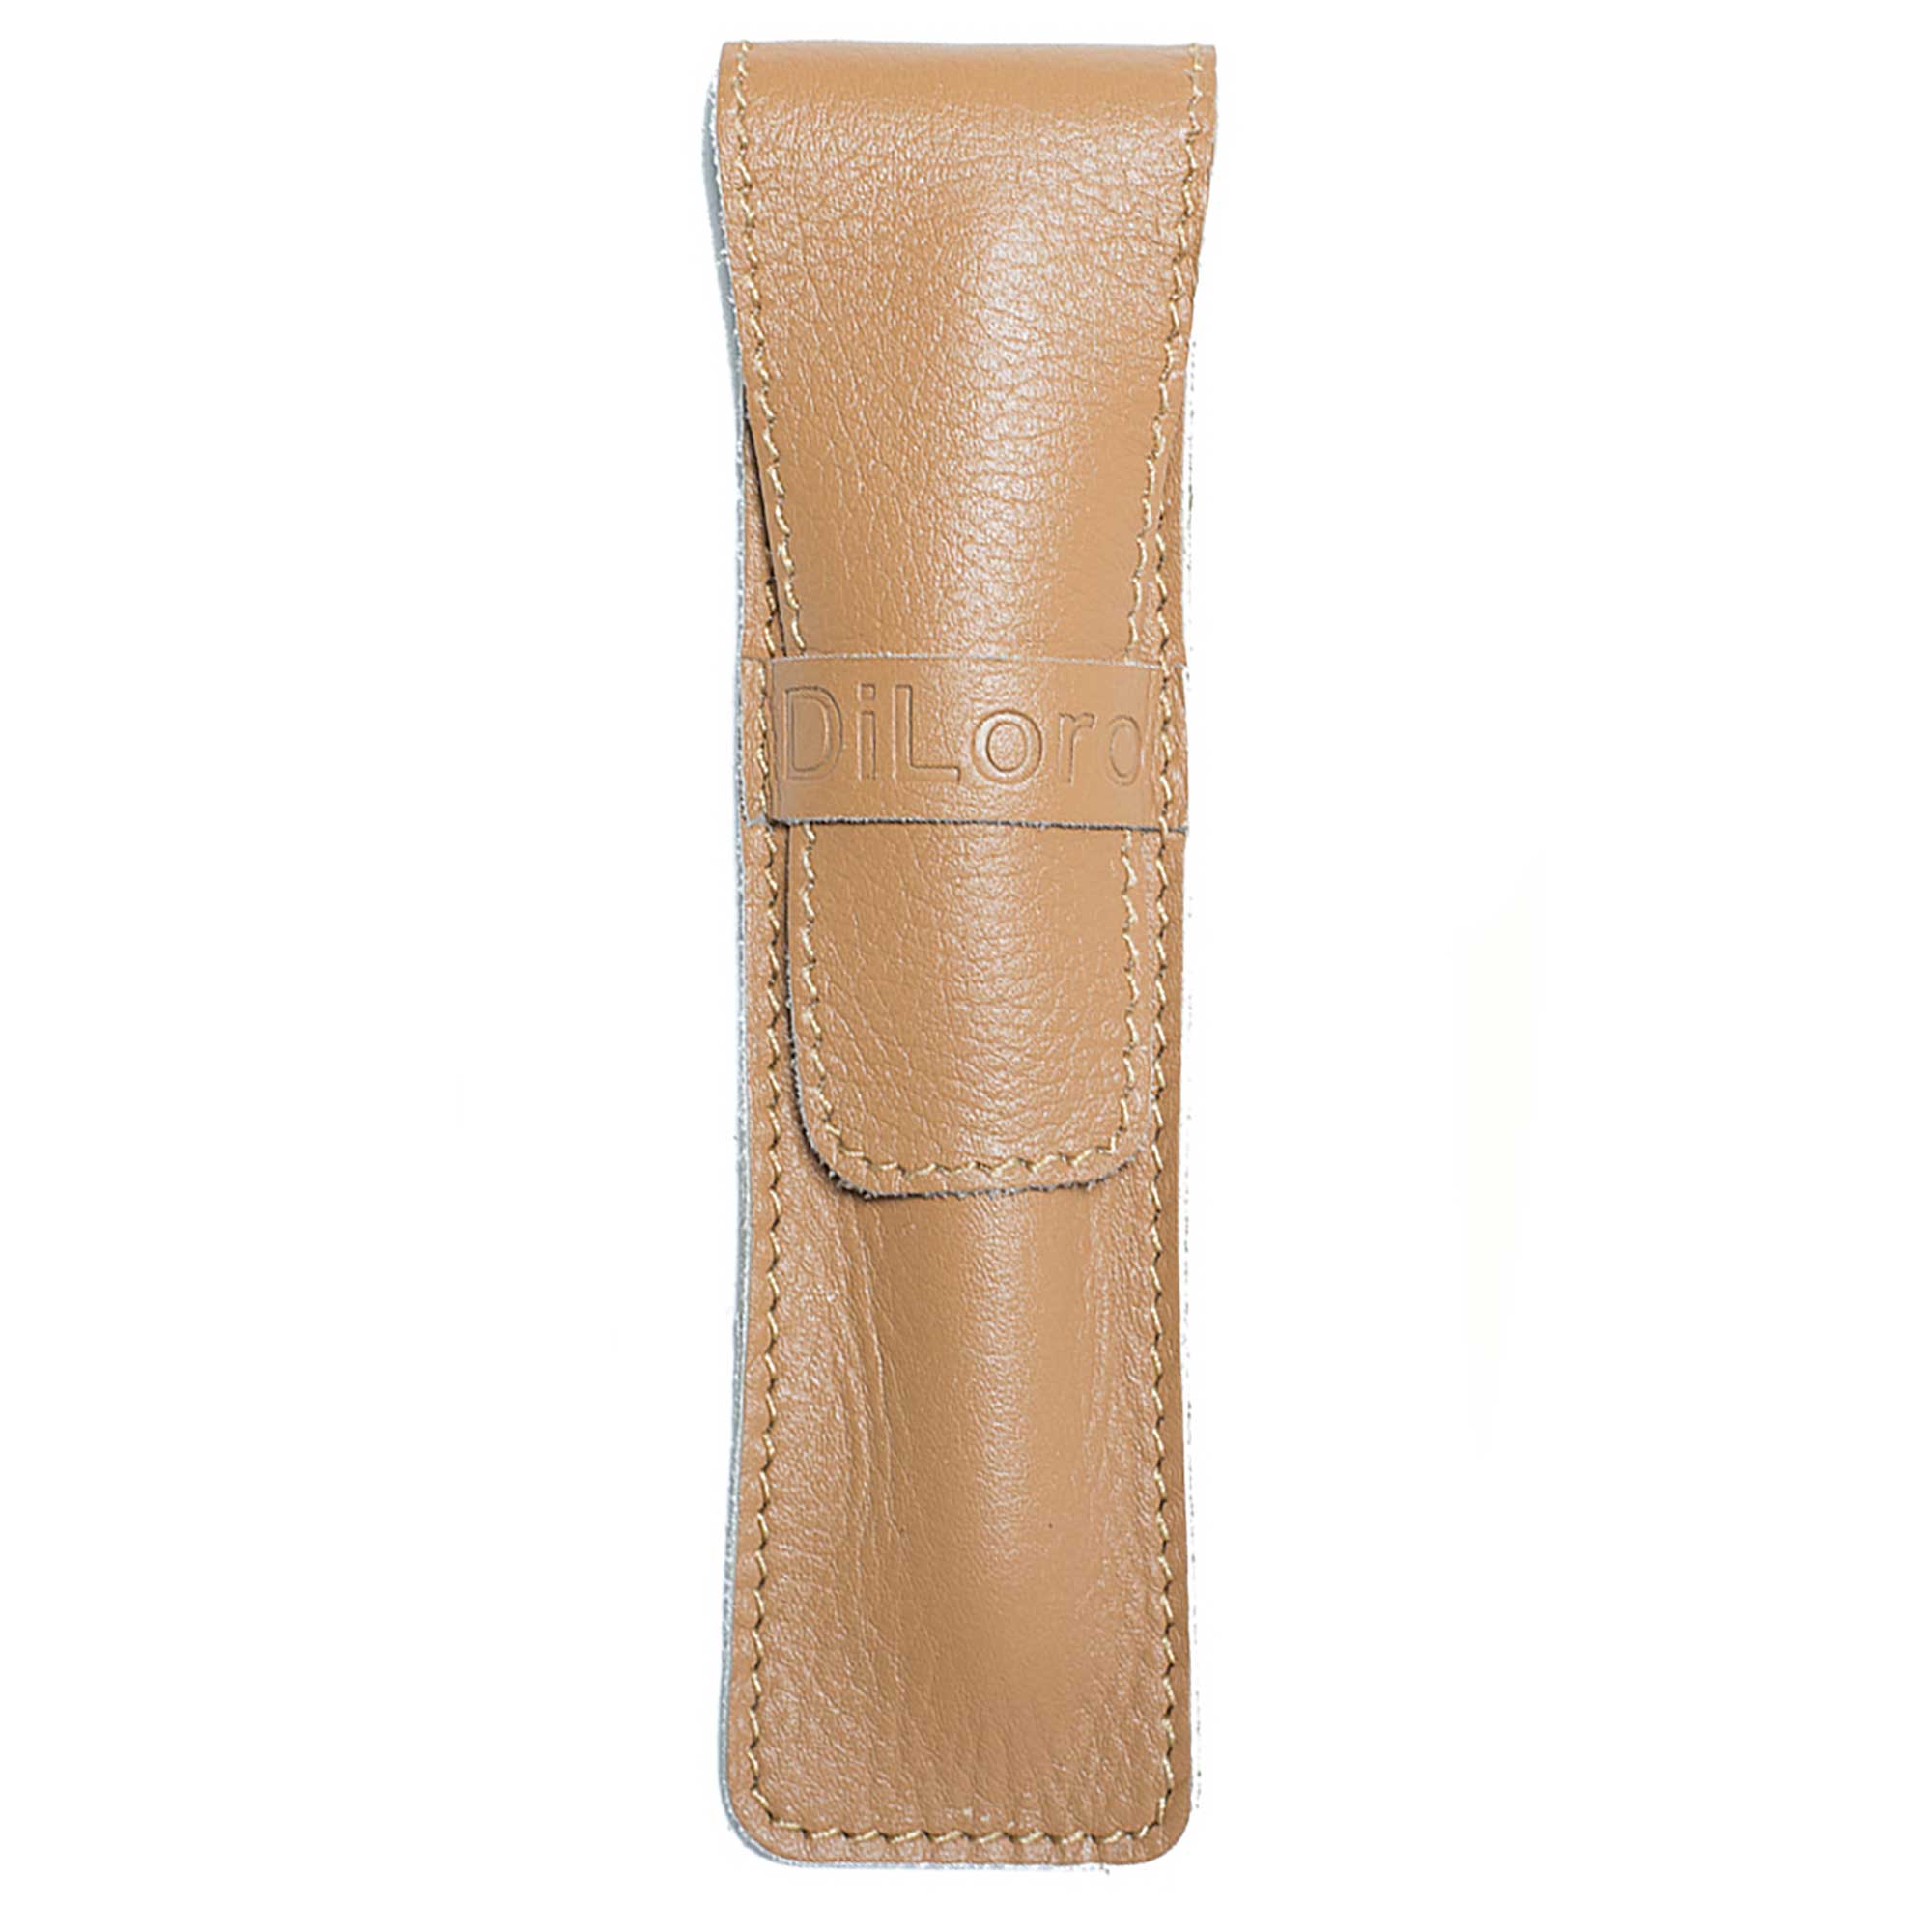 DiLoro Single Leather Pen Holder in Caramel, Full Grain Leather